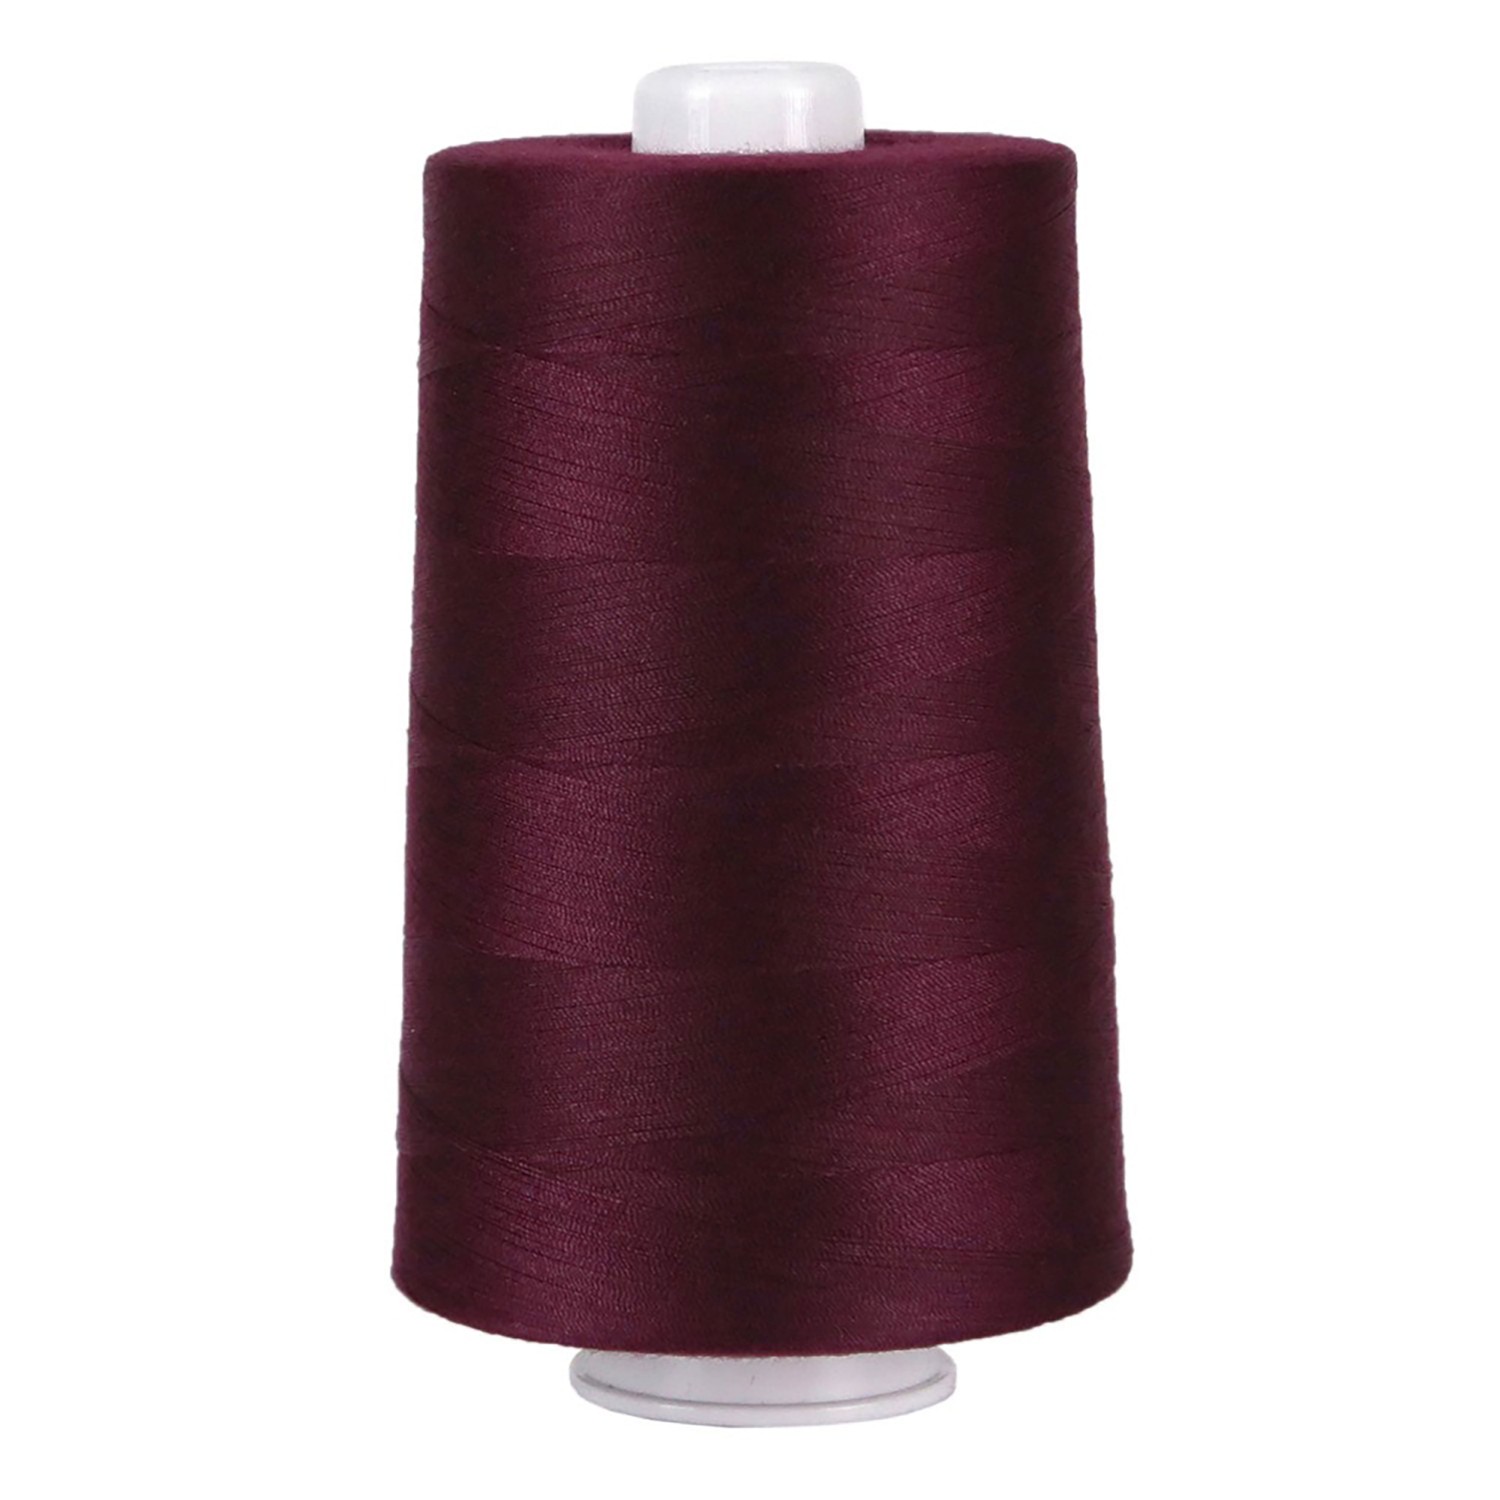 3025 Dark Gray Omni Polyester Thread